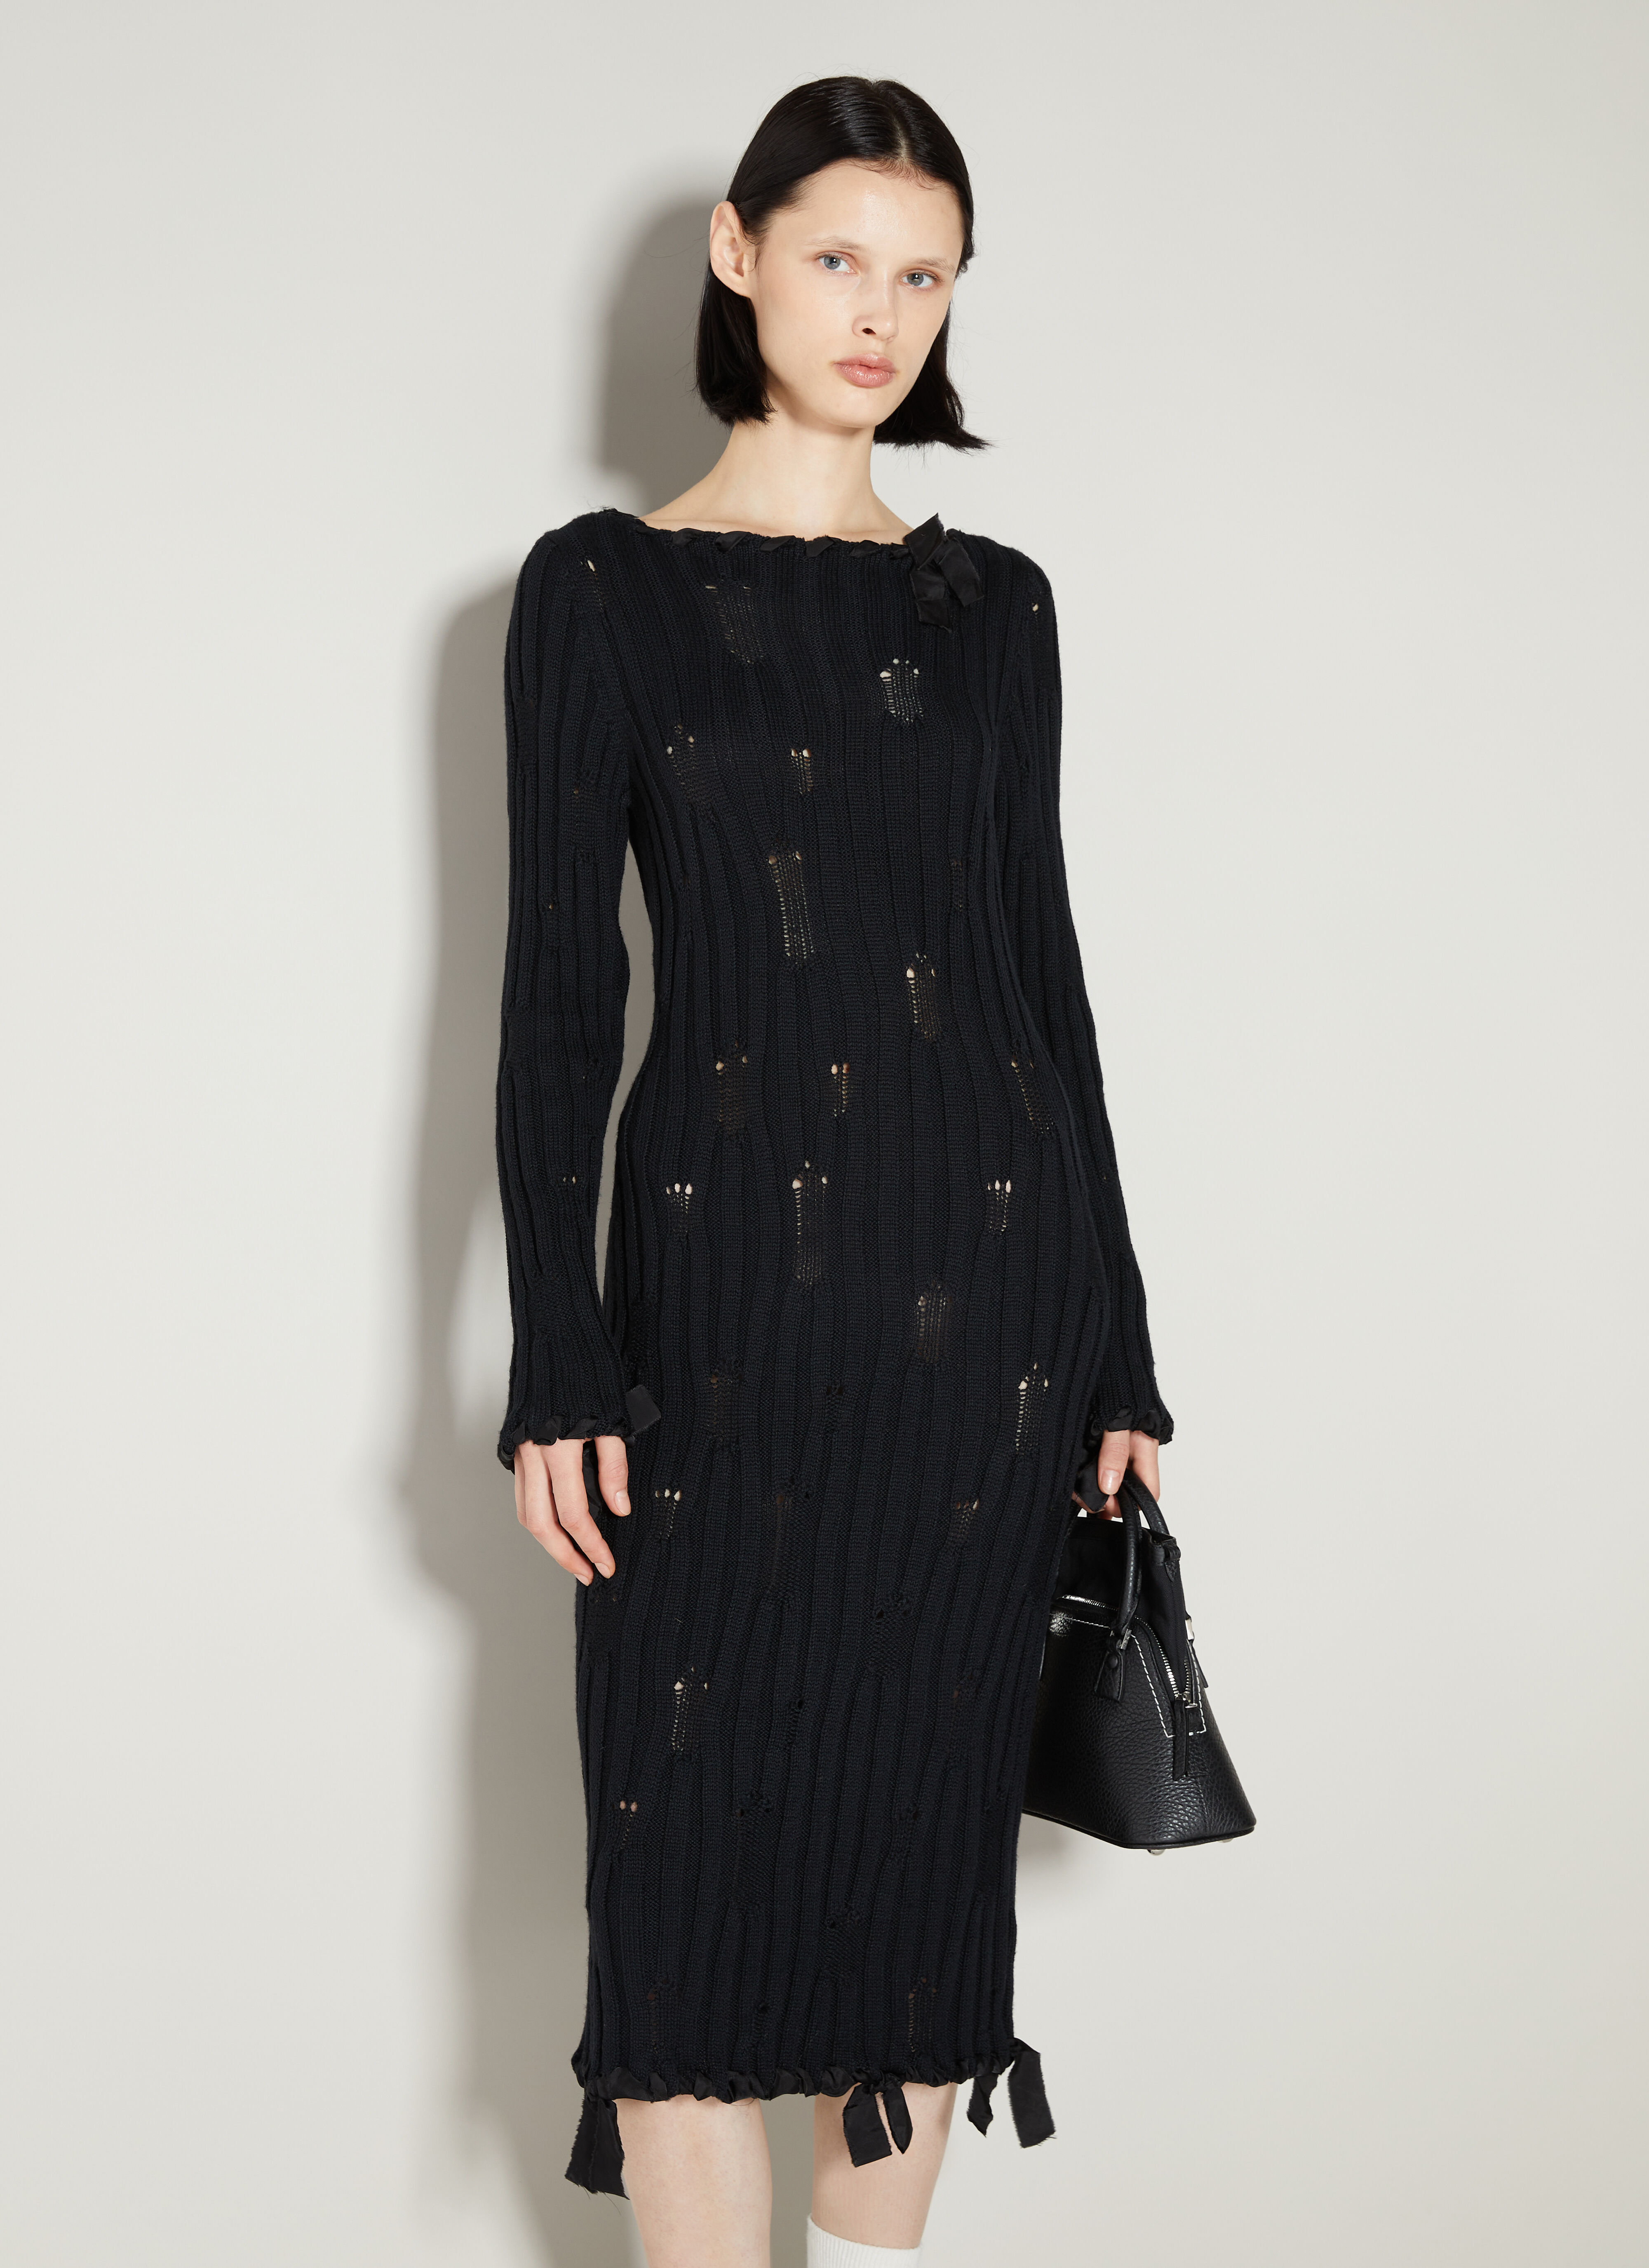 MM6 Maison Margiela Distressed Knit Dress in Black | LN-CC®